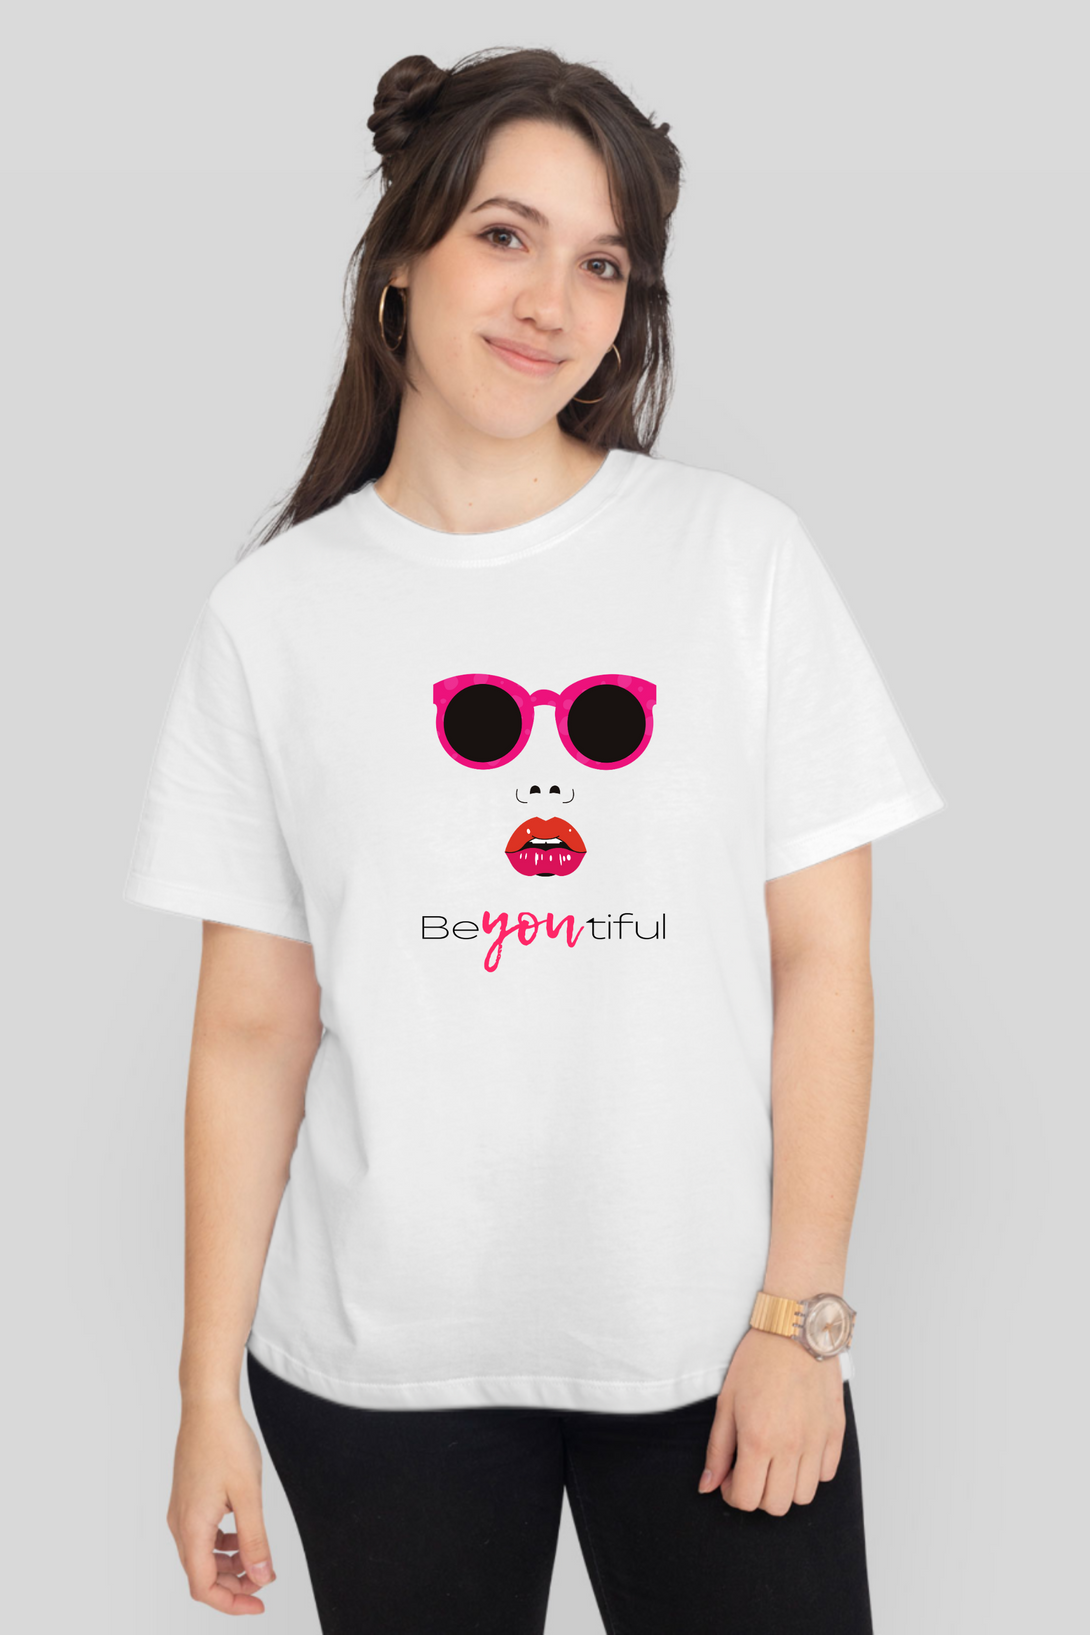 Beyoutiful Printed T-Shirt For Women - WowWaves - 8